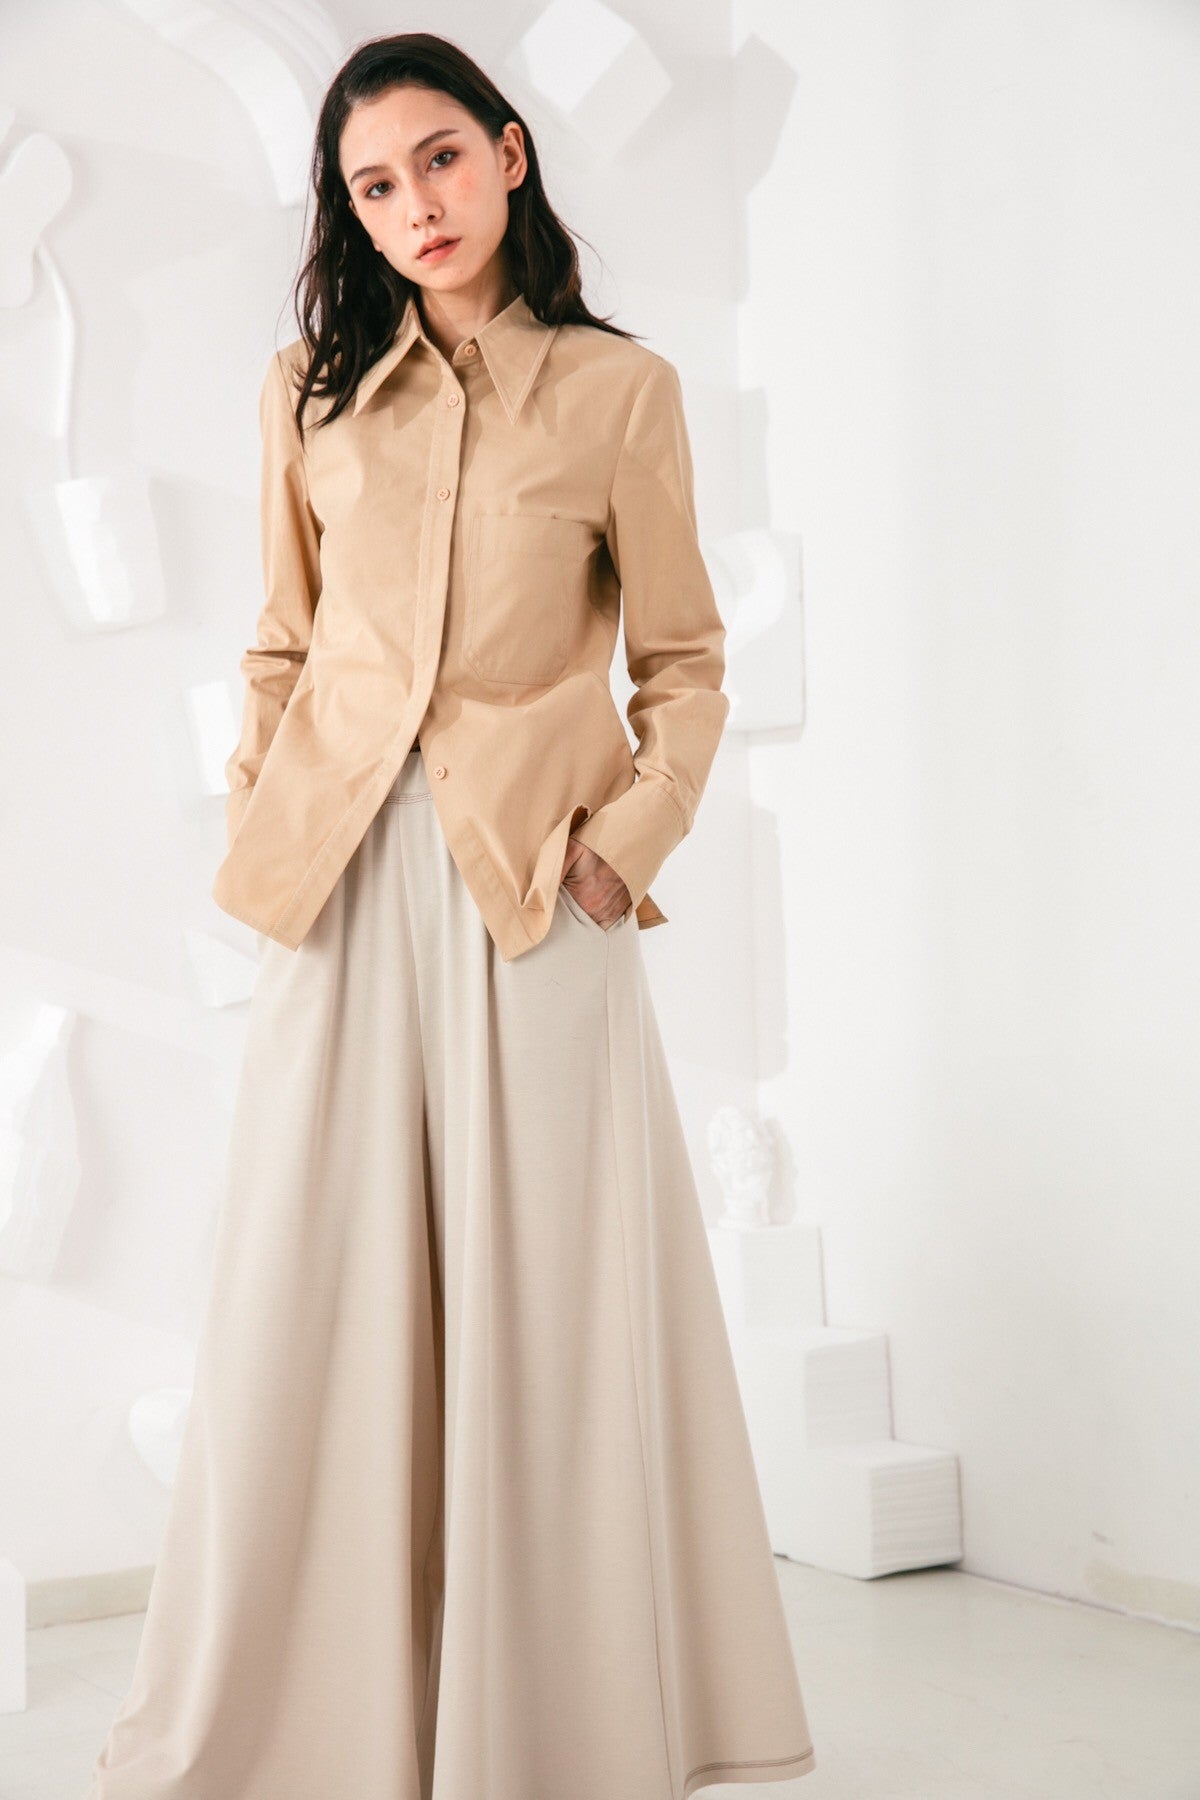 SKYE San Francisco SF shop ethical sustainable modern minimalist quality women clothing fashion Stéphane Pants beige